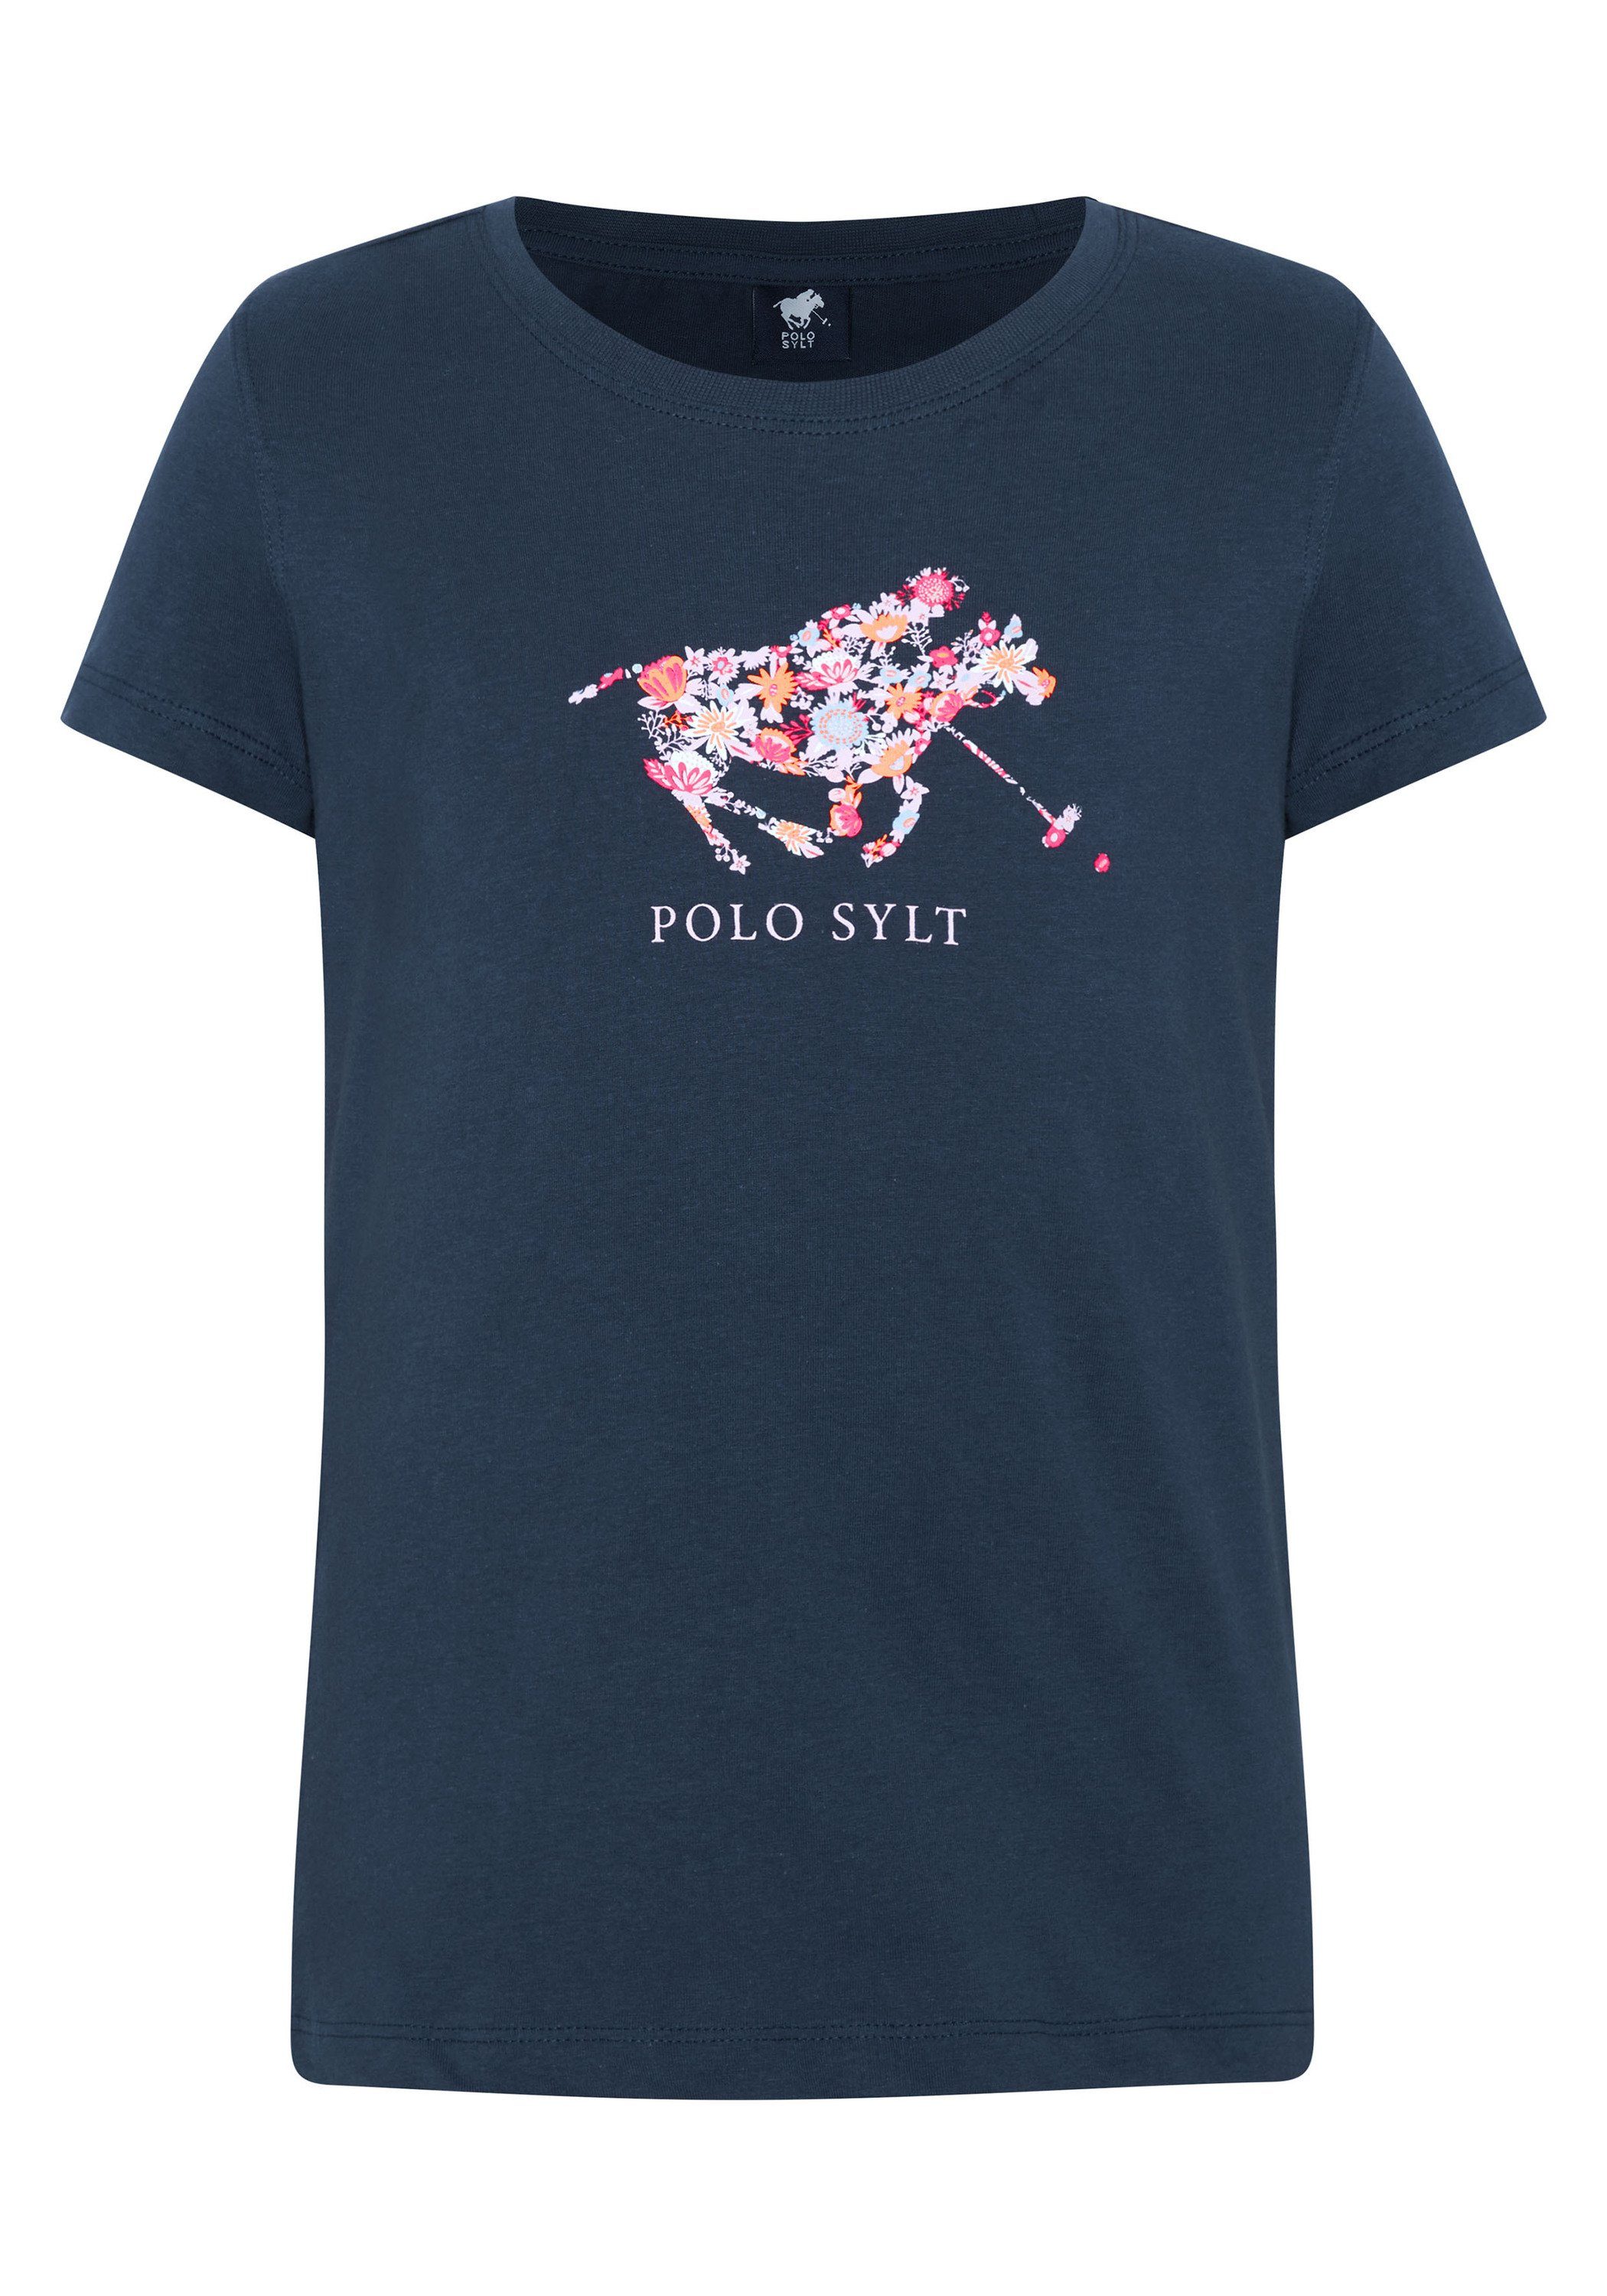 Polo Sylt Print-Shirt aus weichem Jersey 19-4010 Total Eclipse